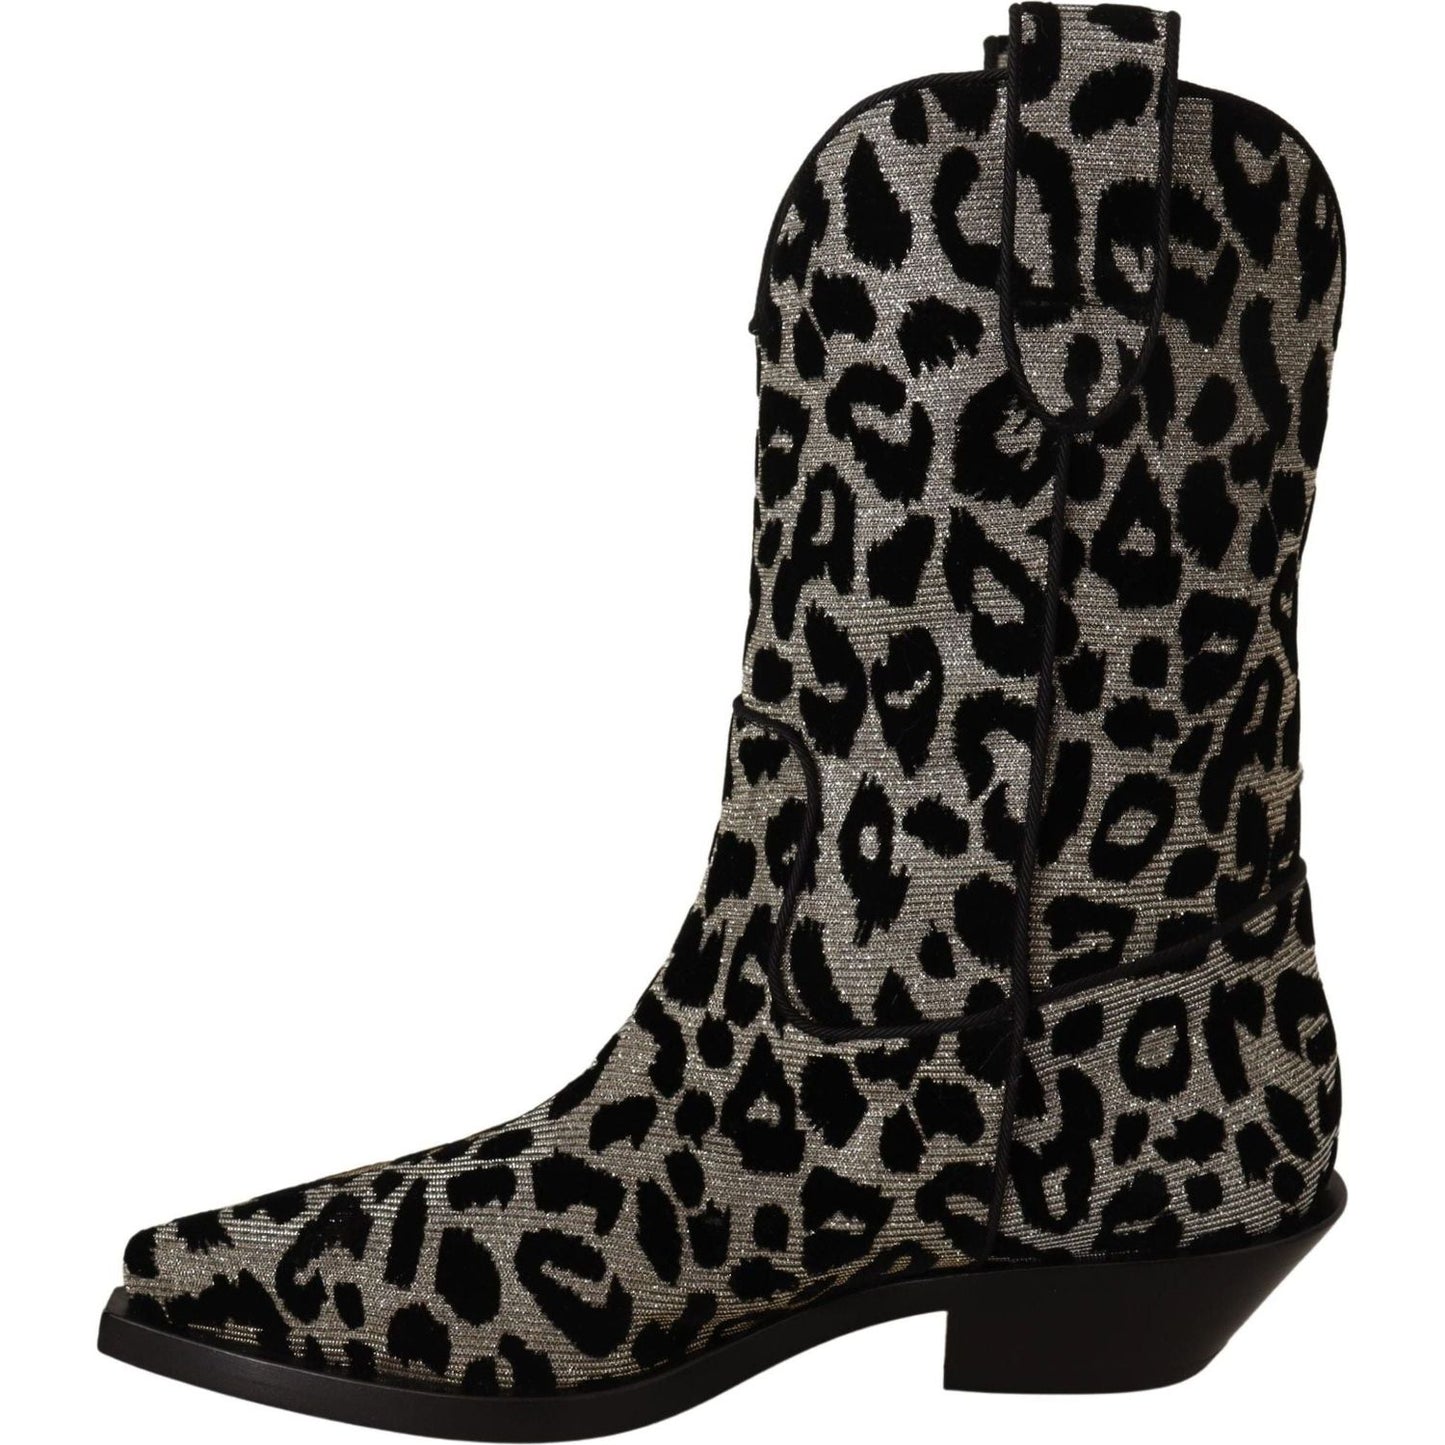 Dolce & Gabbana Elegant Leopard Print Mid Calf Boots gray-black-leopard-cowboy-boots-shoes IMG_6046-427bc681-5c1.jpg